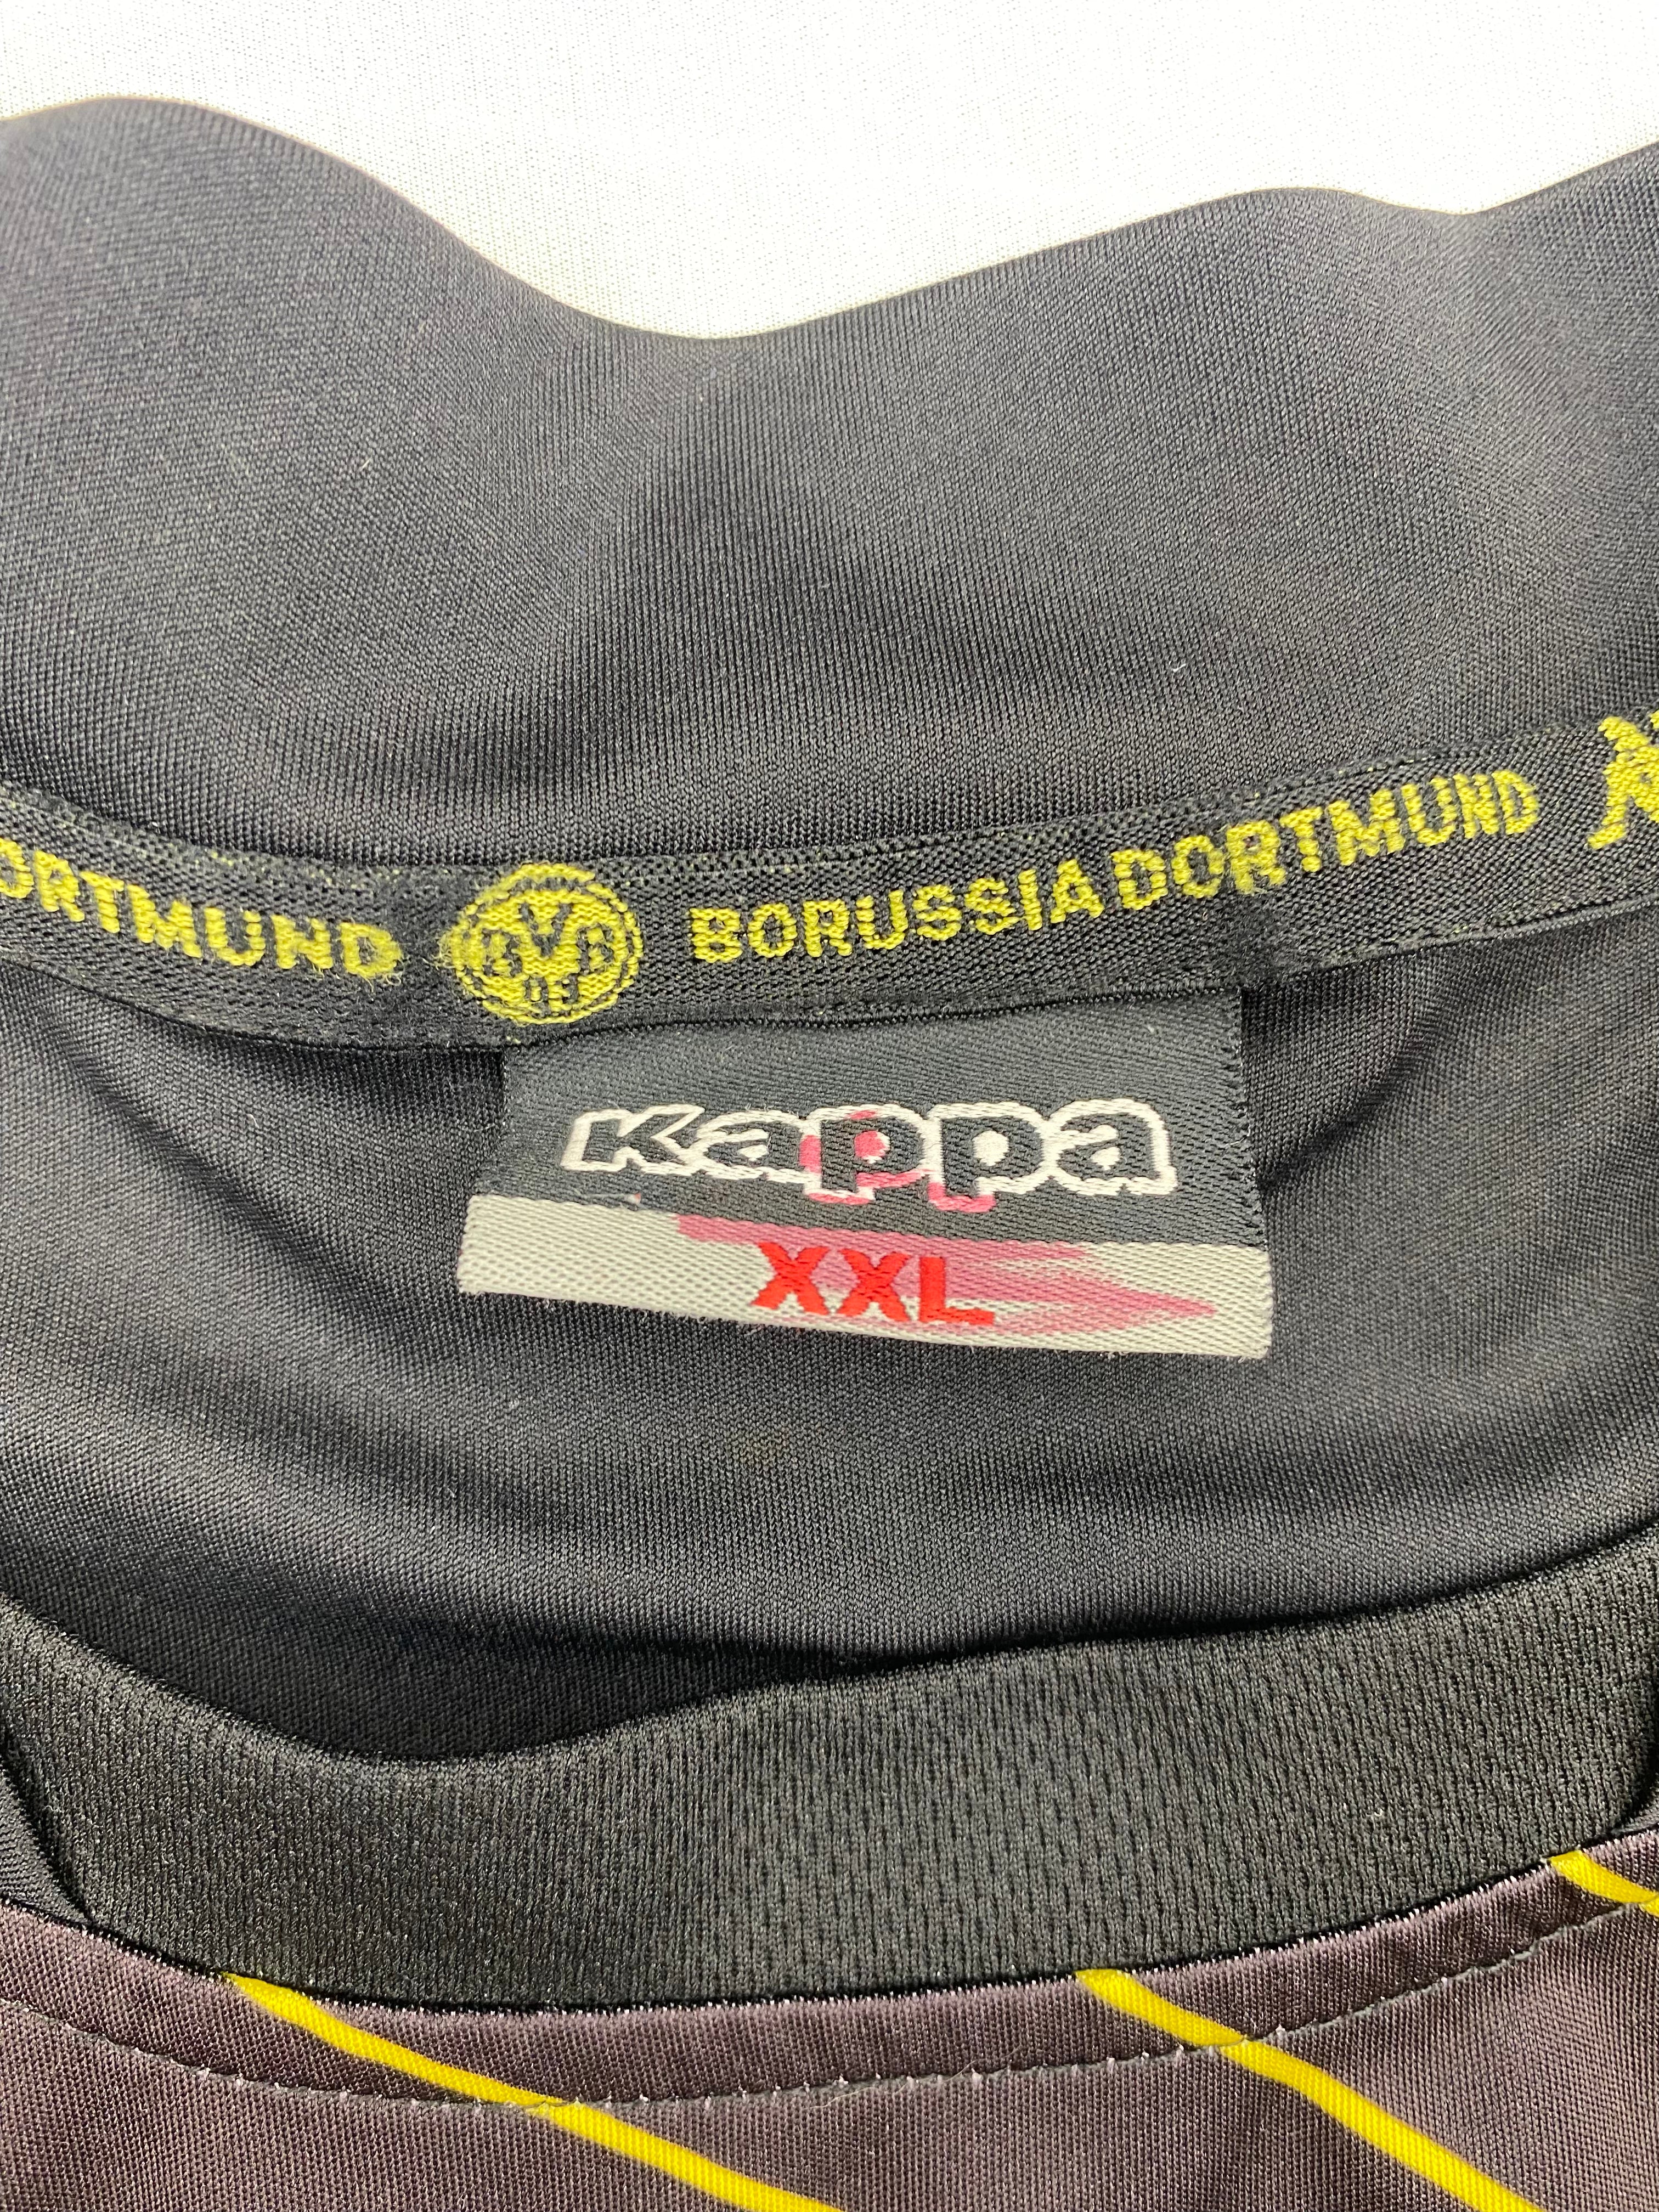 2009/10 Borussia Dortmund Away Shirt (XXL) 9/10